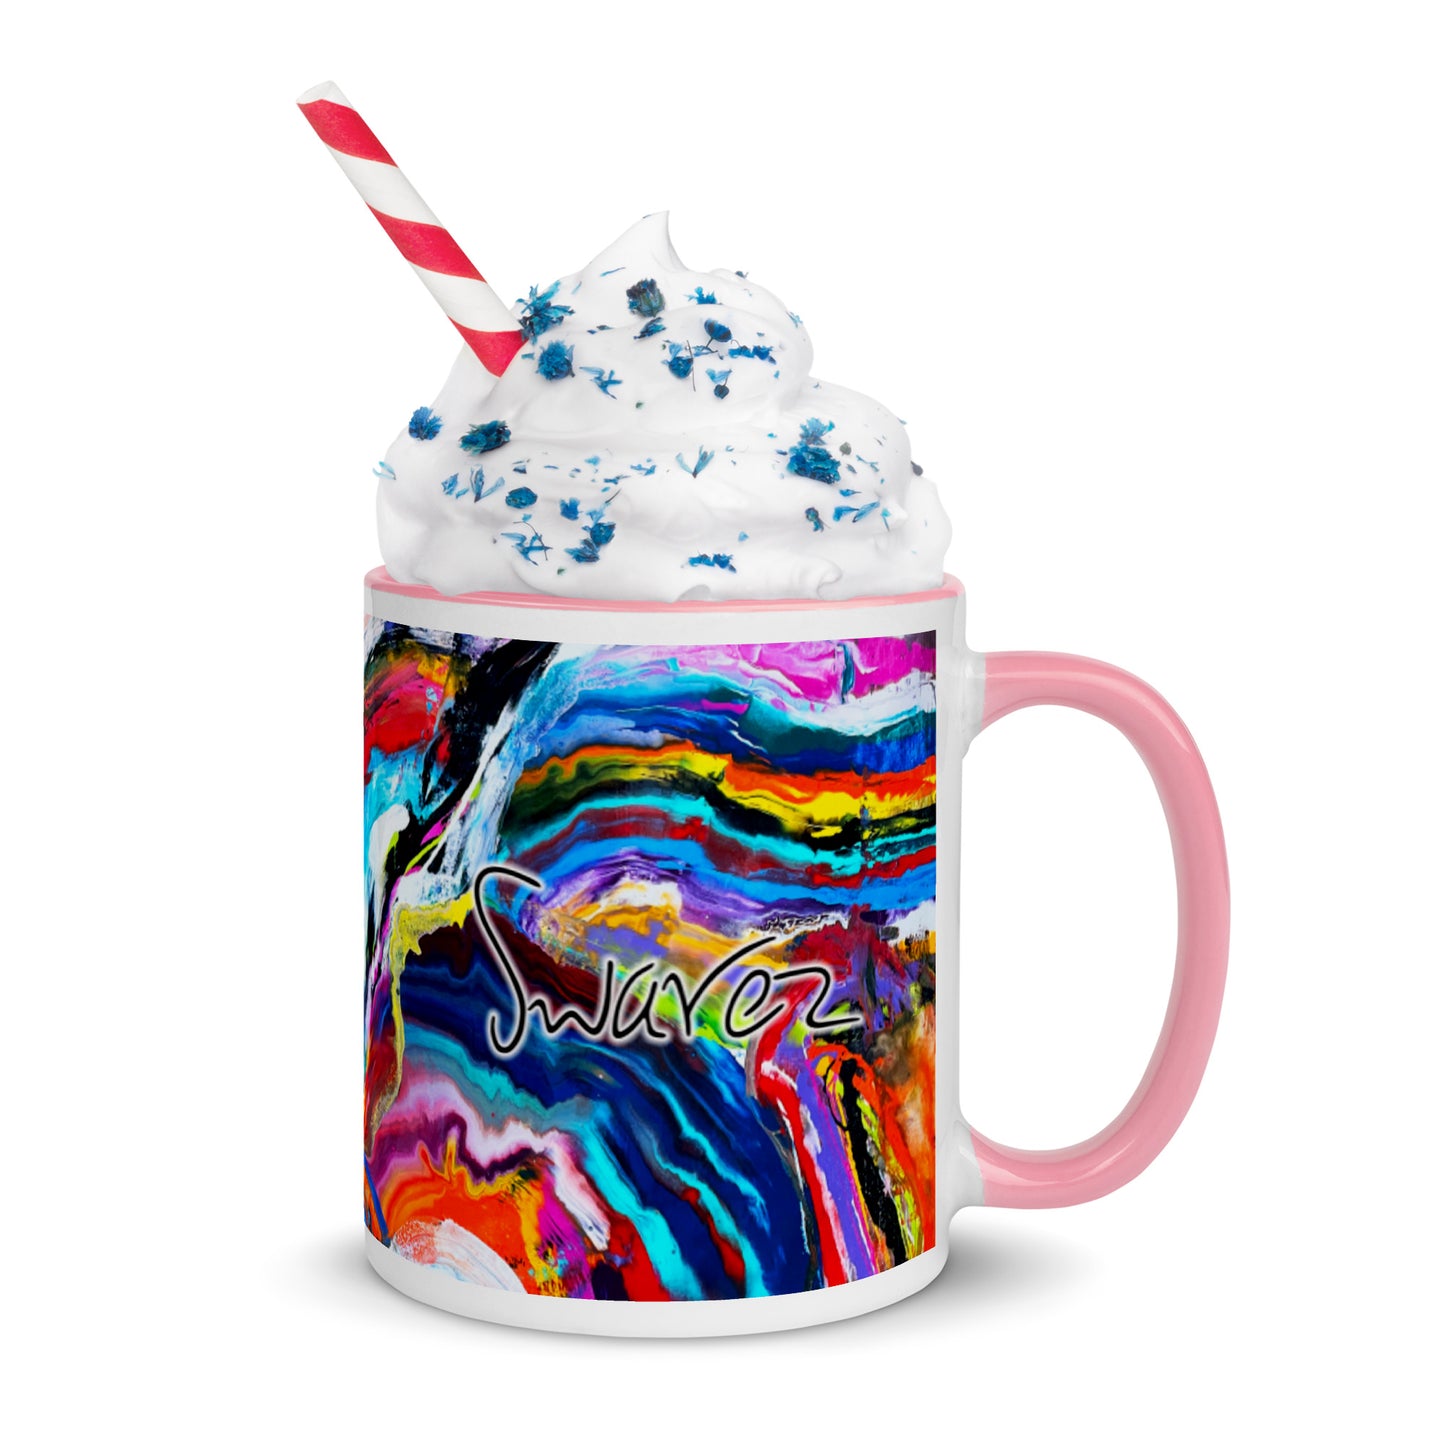 Mug with Color Inside - Rainbow Wave design